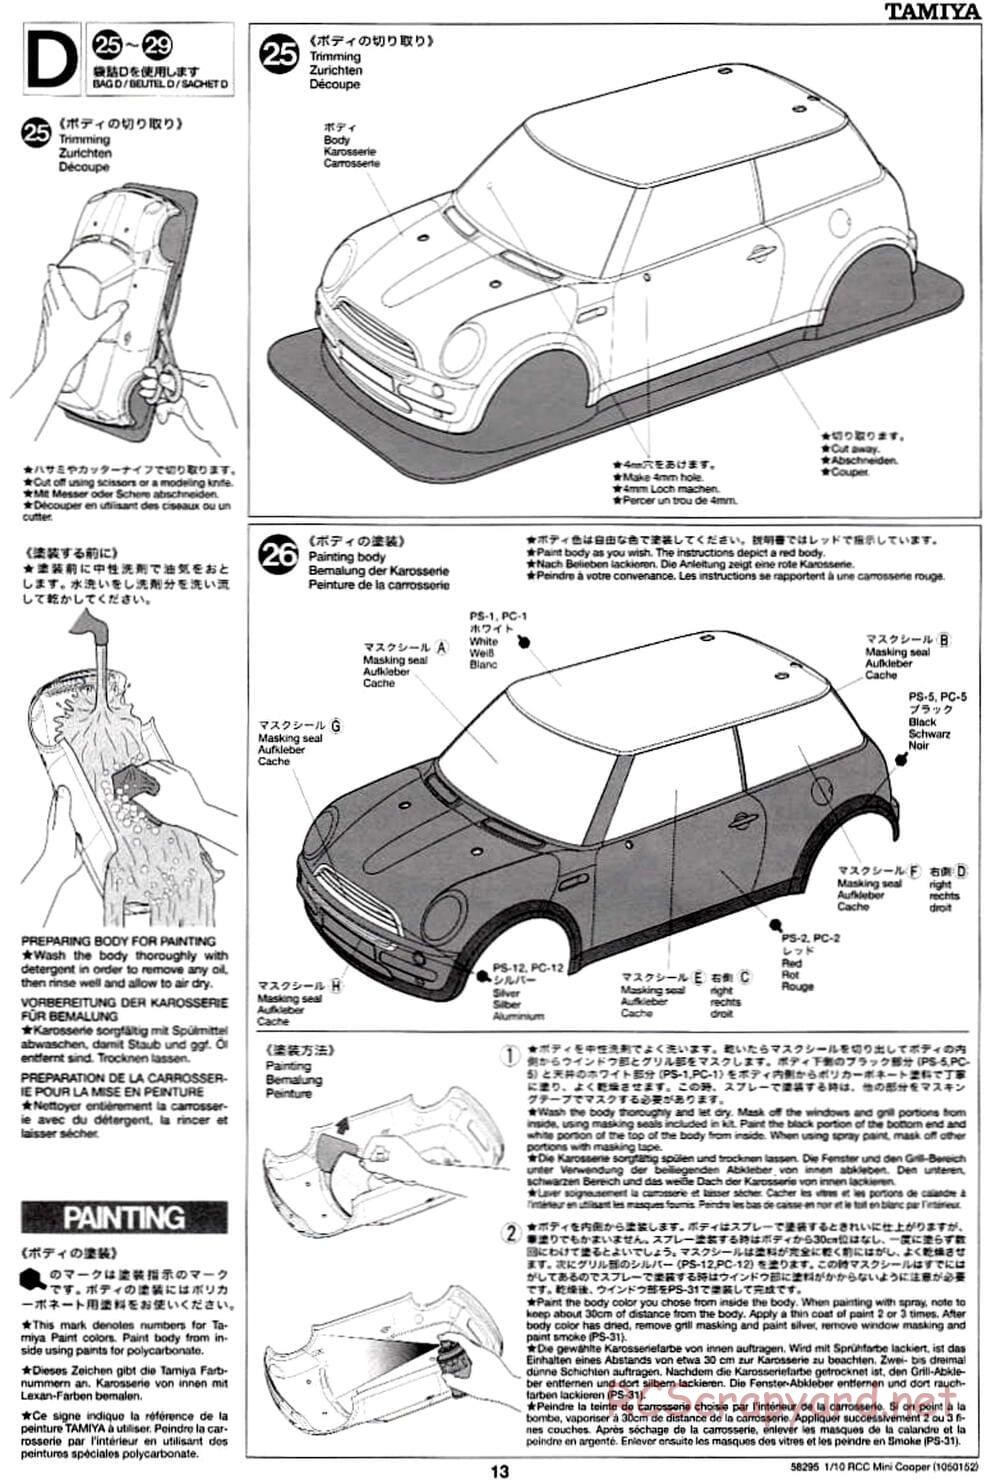 Tamiya - Mini Cooper - M03L Chassis - Manual - Page 12